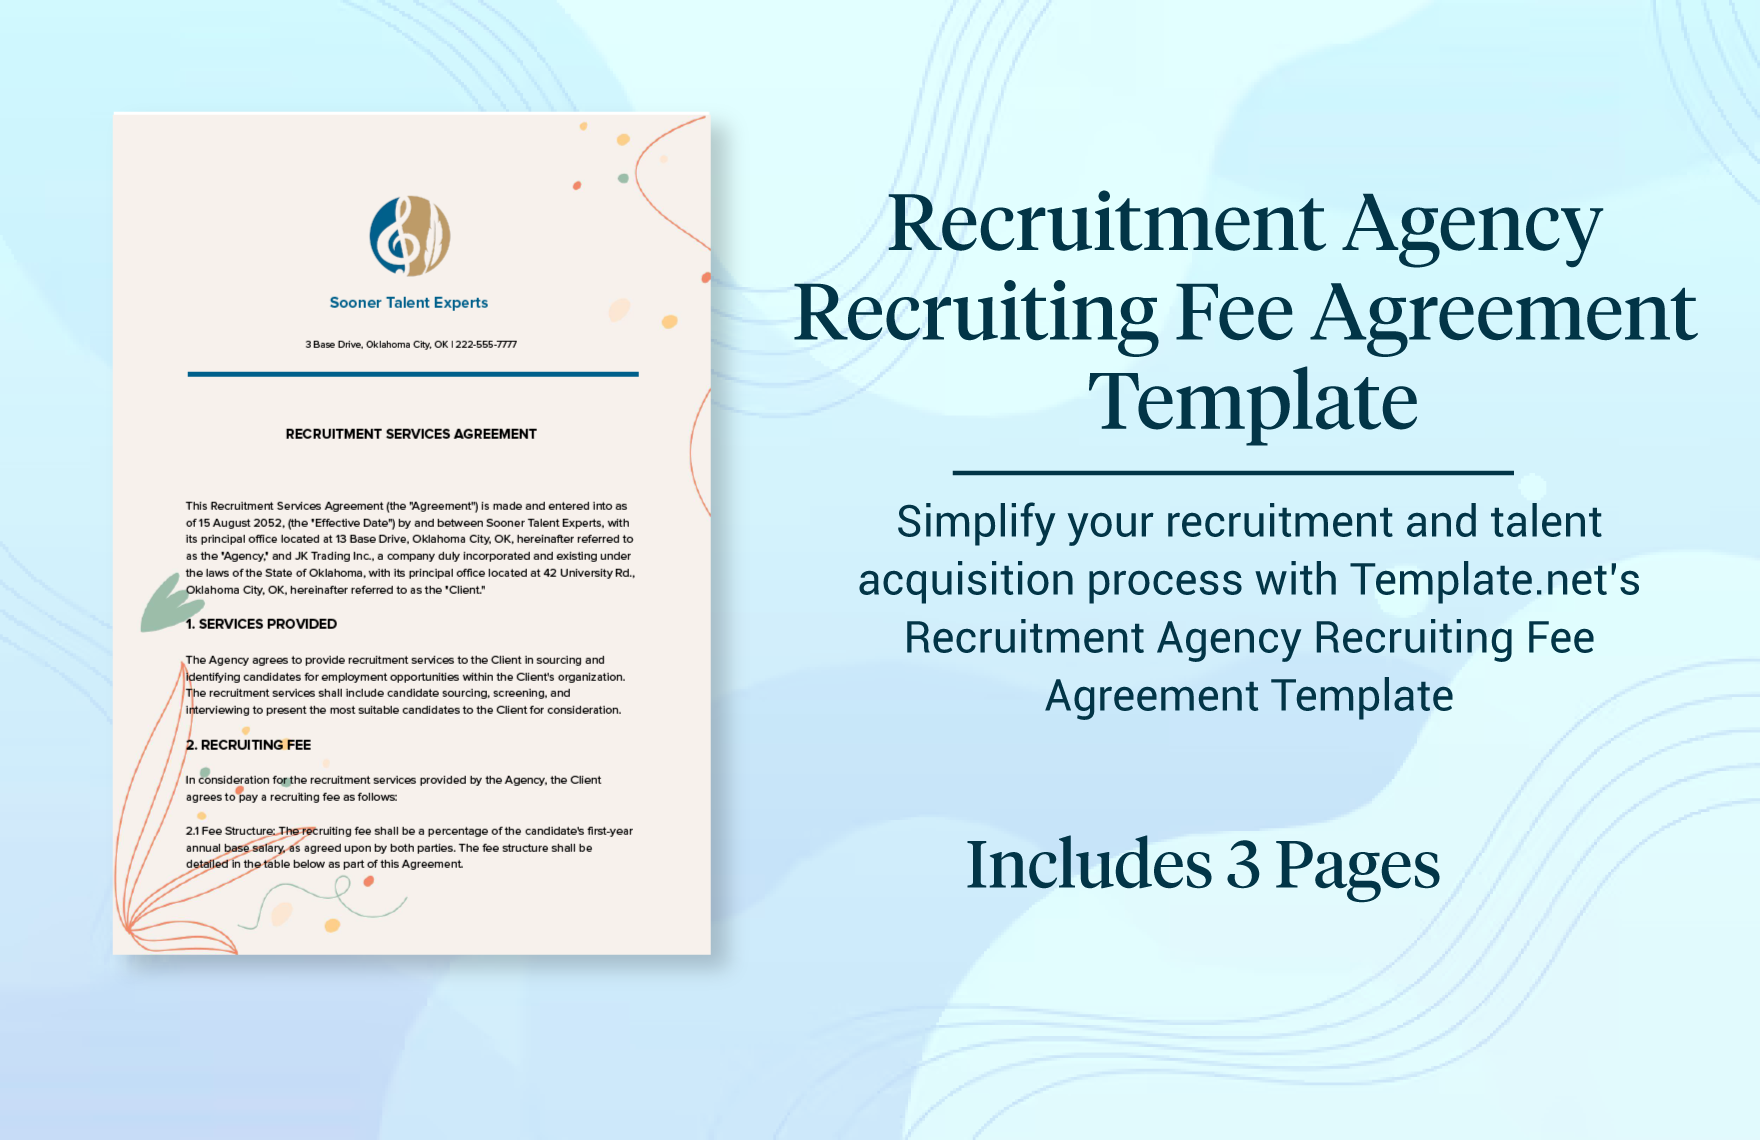 Recruitment Agency Recruiting Fee Agreement Template